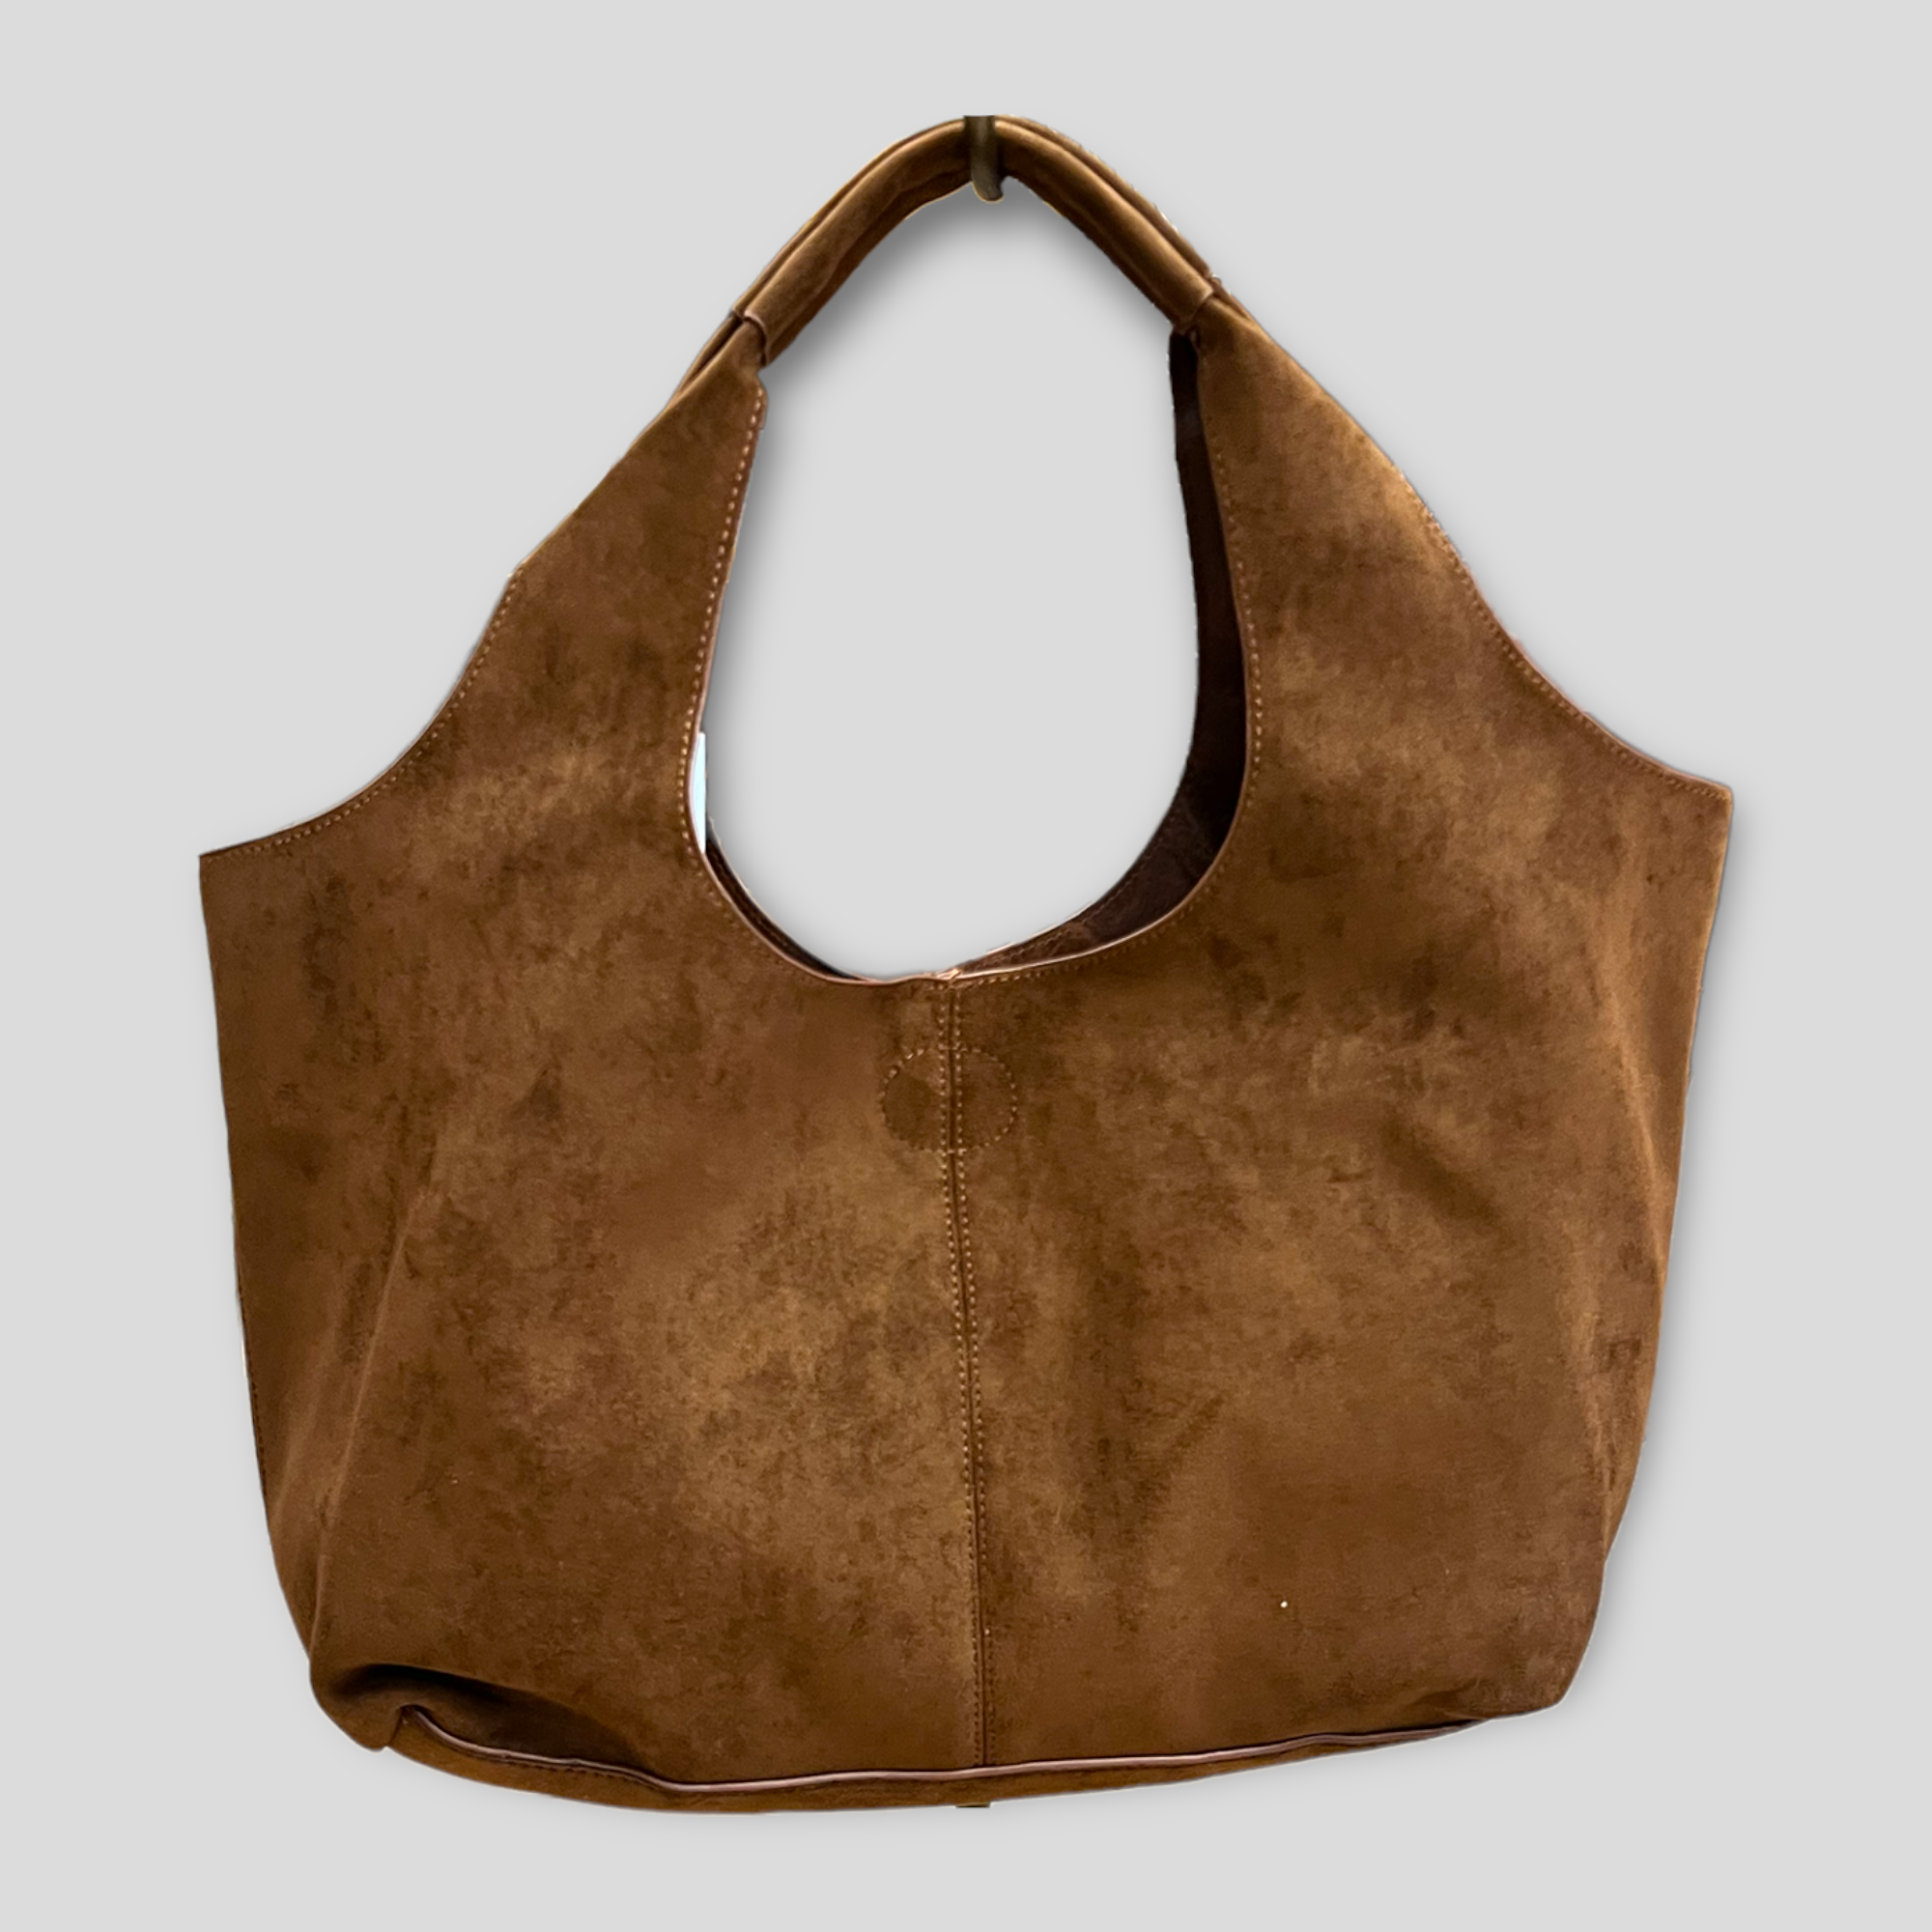 Genuine Suede Leather Hobo Shopper Bag